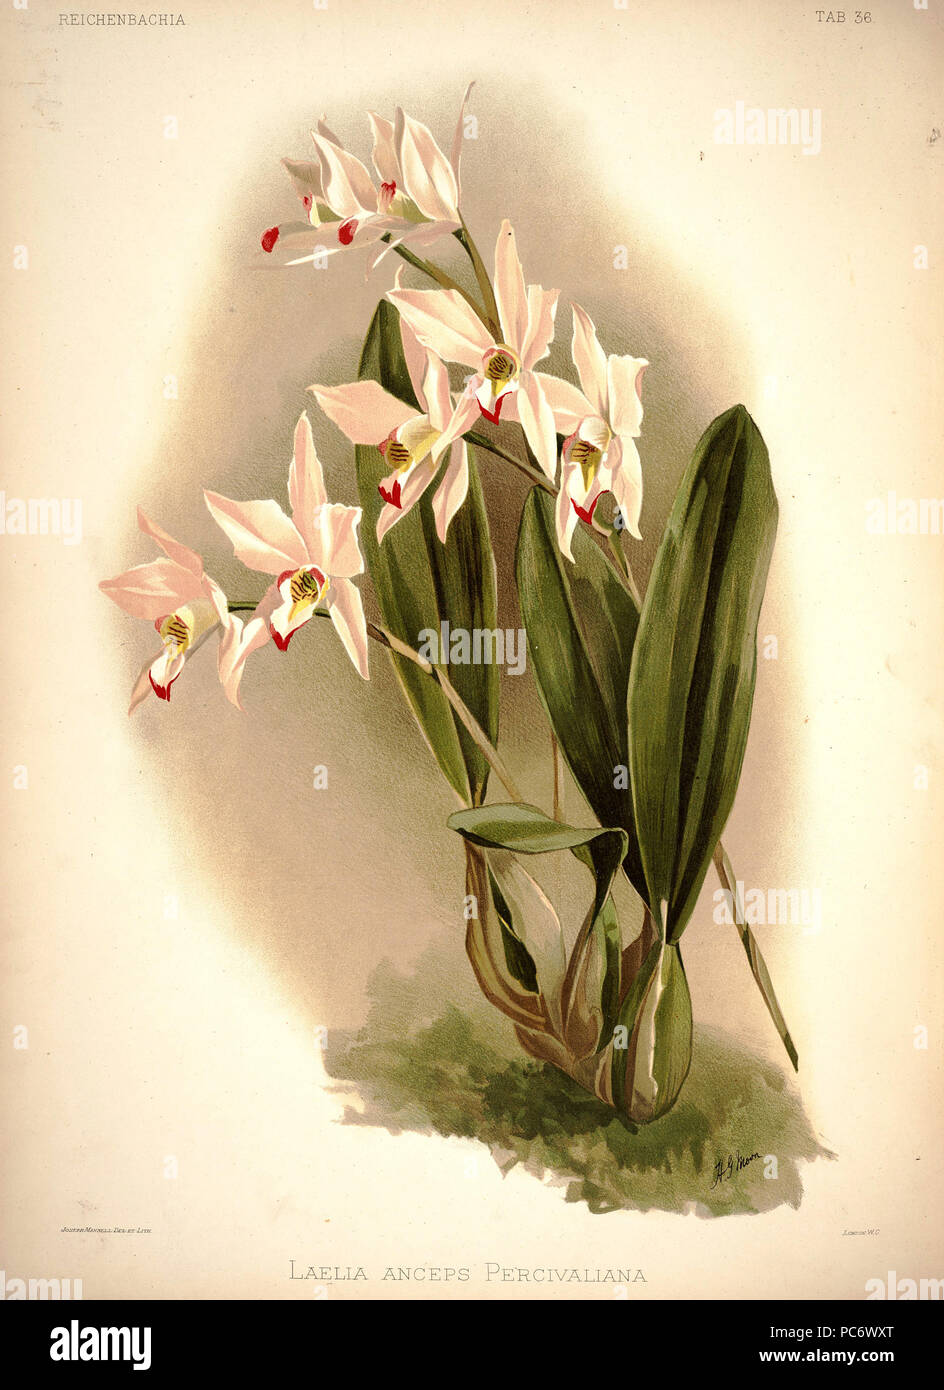 220 Frederick Sander - Reichenbachia I plate 36 (1888) - Laelia anceps percivaliana Stock Photo